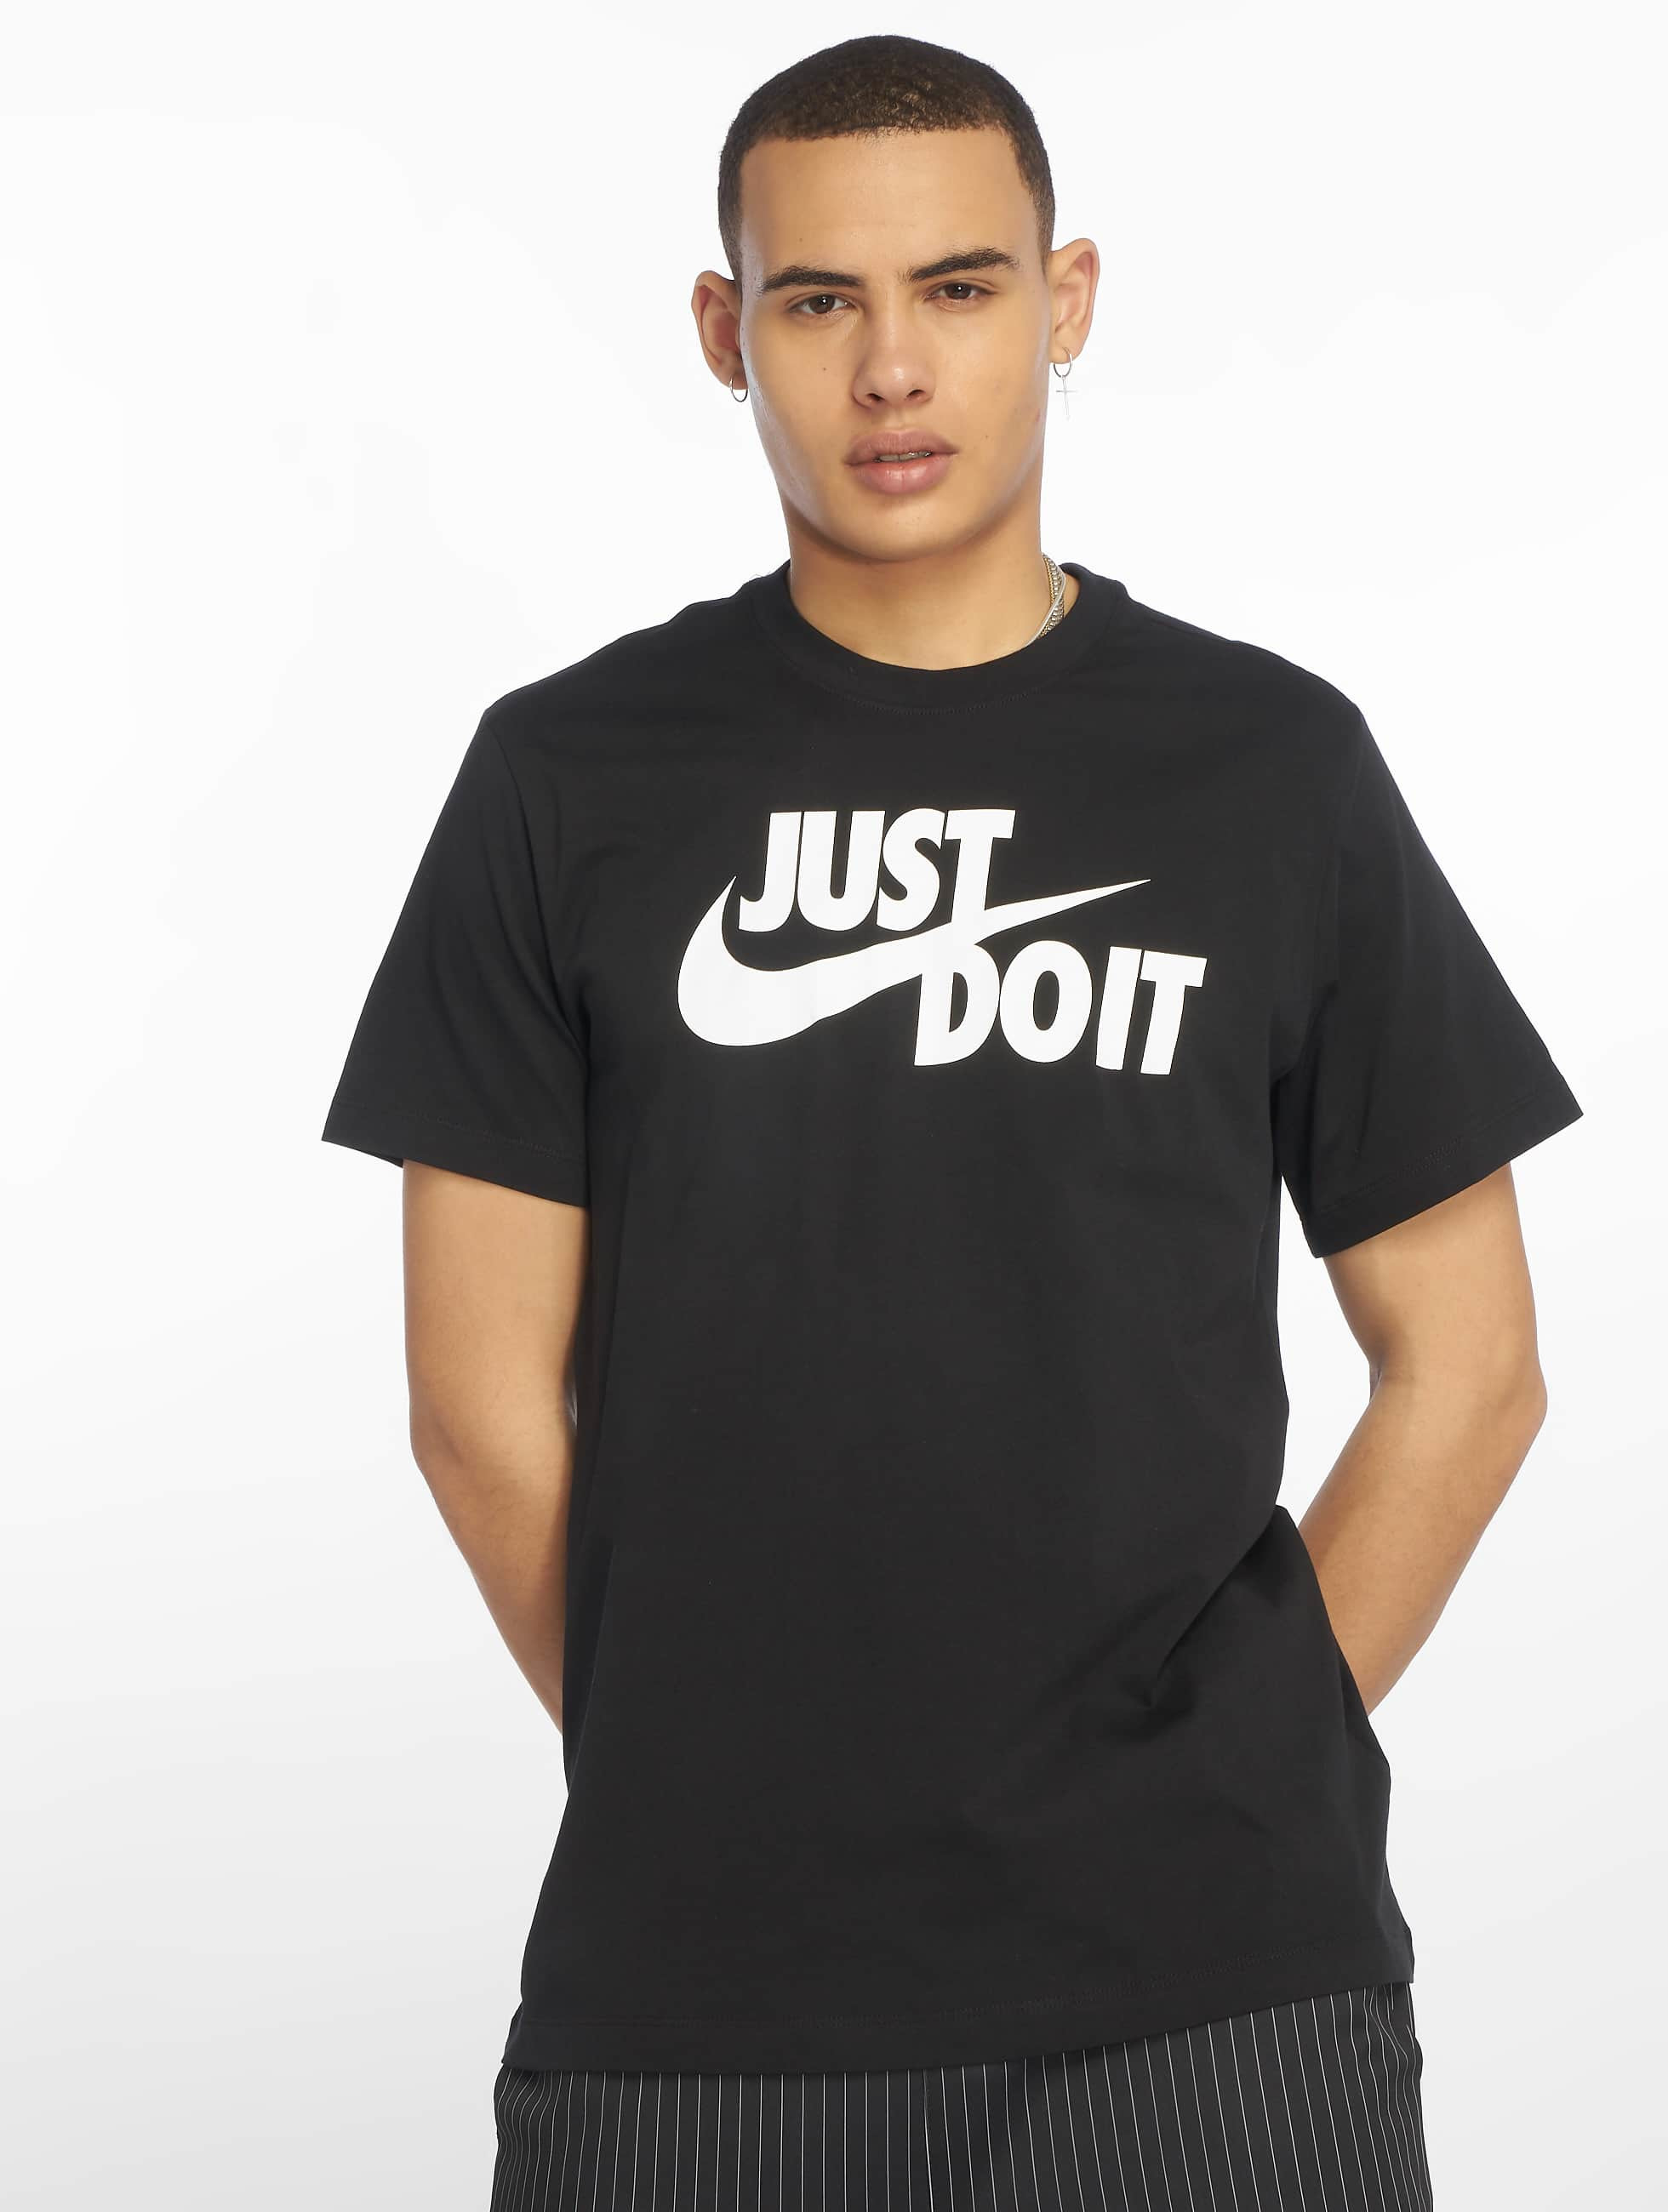 Nike Overwear / T-Shirt Just Do It Swoosh in black 587348